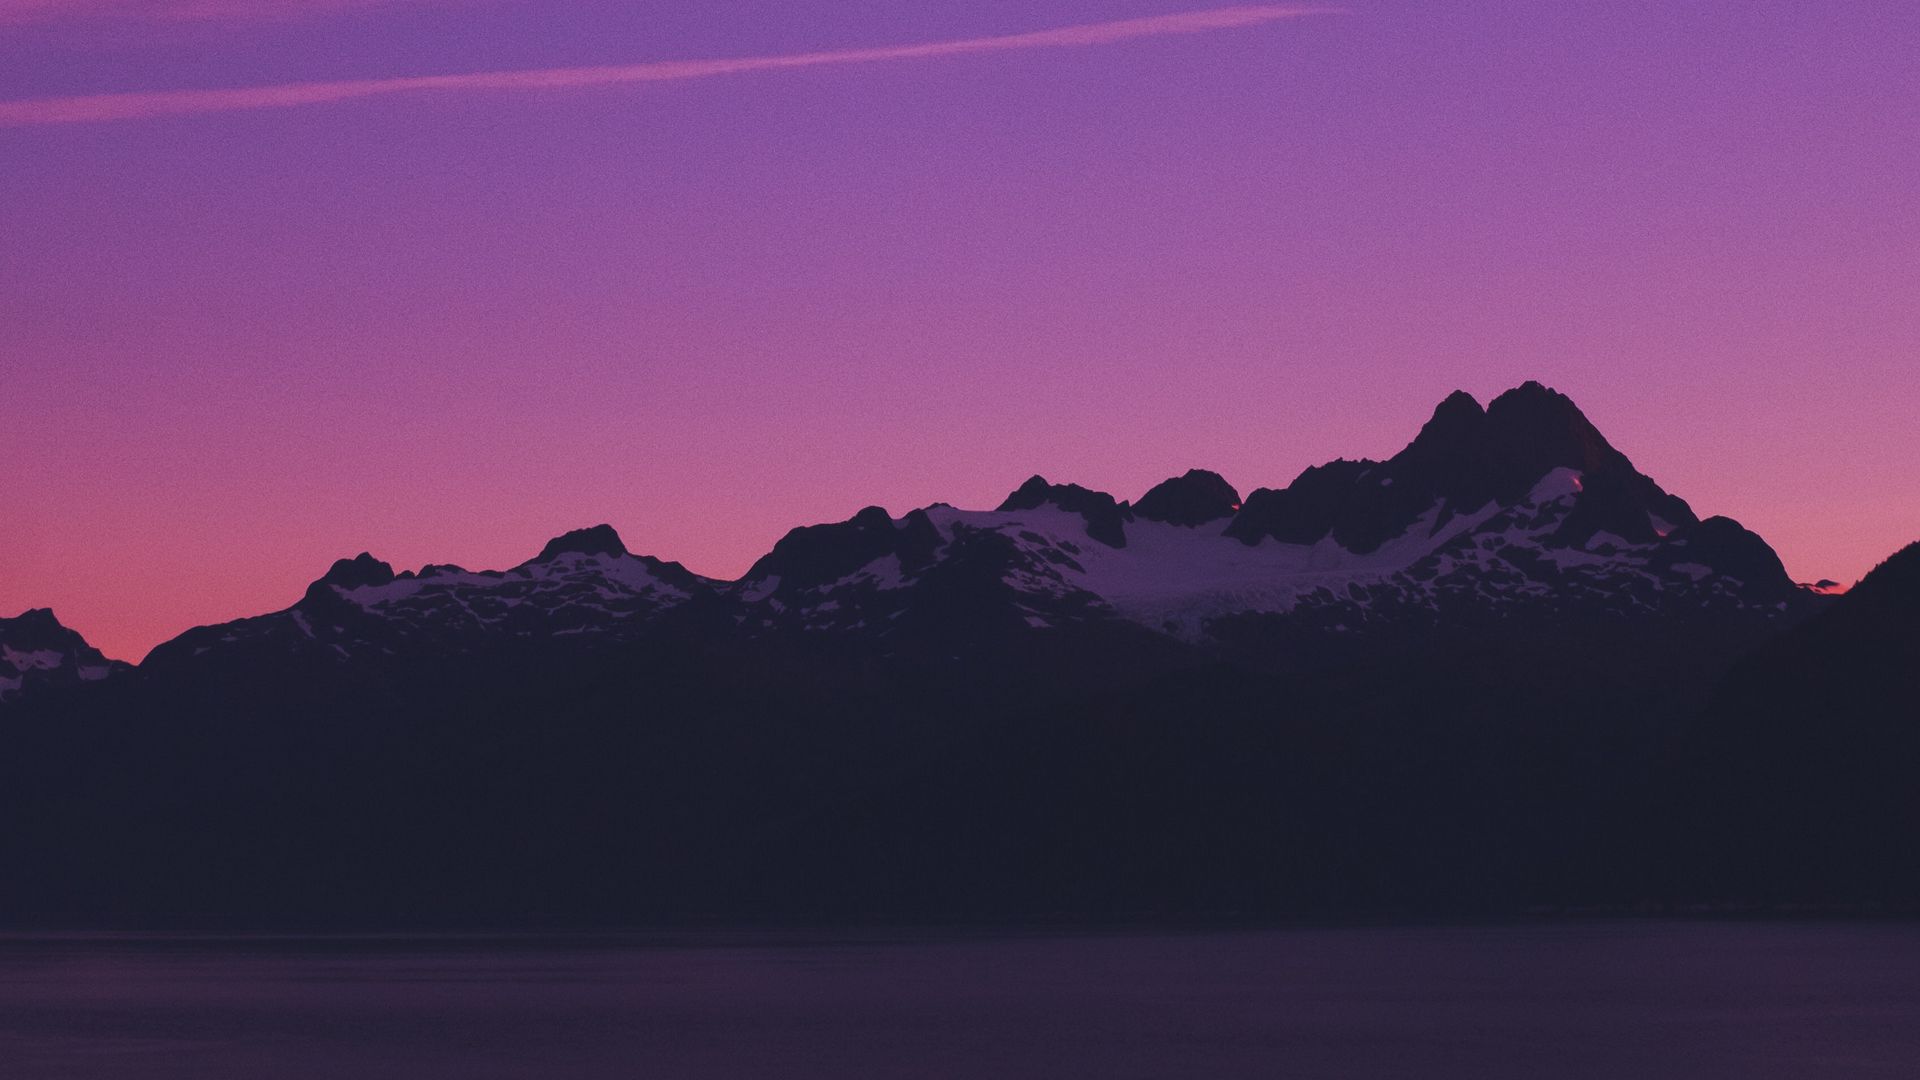 Download wallpaper 1920x1080 mountains, sky, evening, twilight, purple,  alaska full hd, hdtv, fhd, 1080p hd background